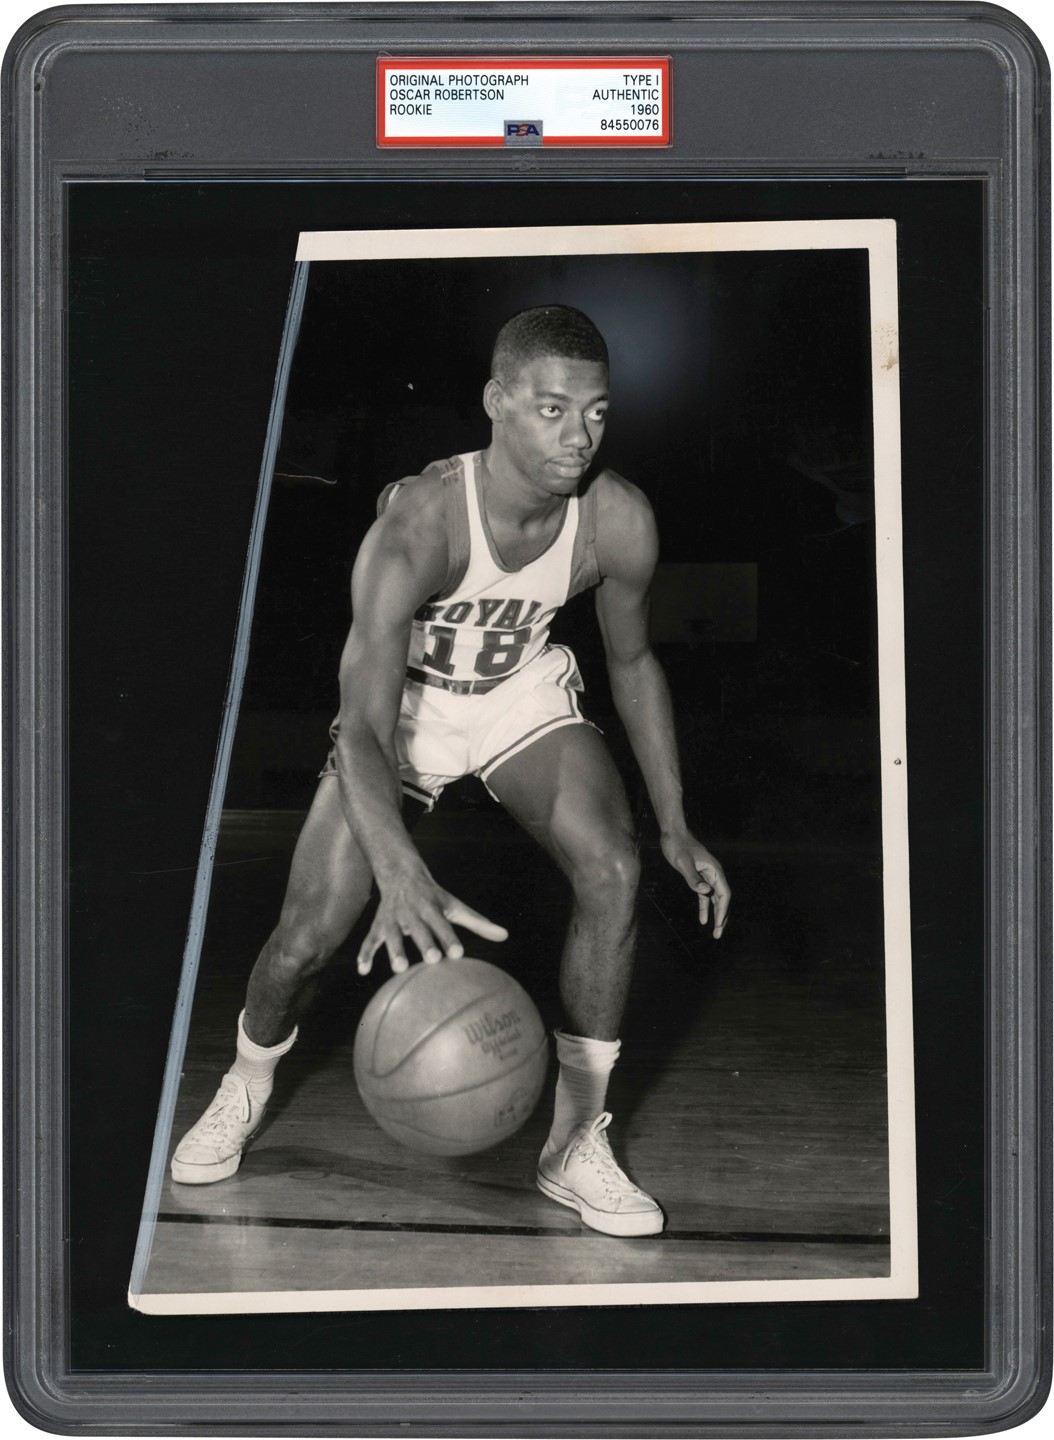 - 1960 Oscar Robertson Original Photograph - Taken Prior to His 1st NBA Game (PSA Type I)